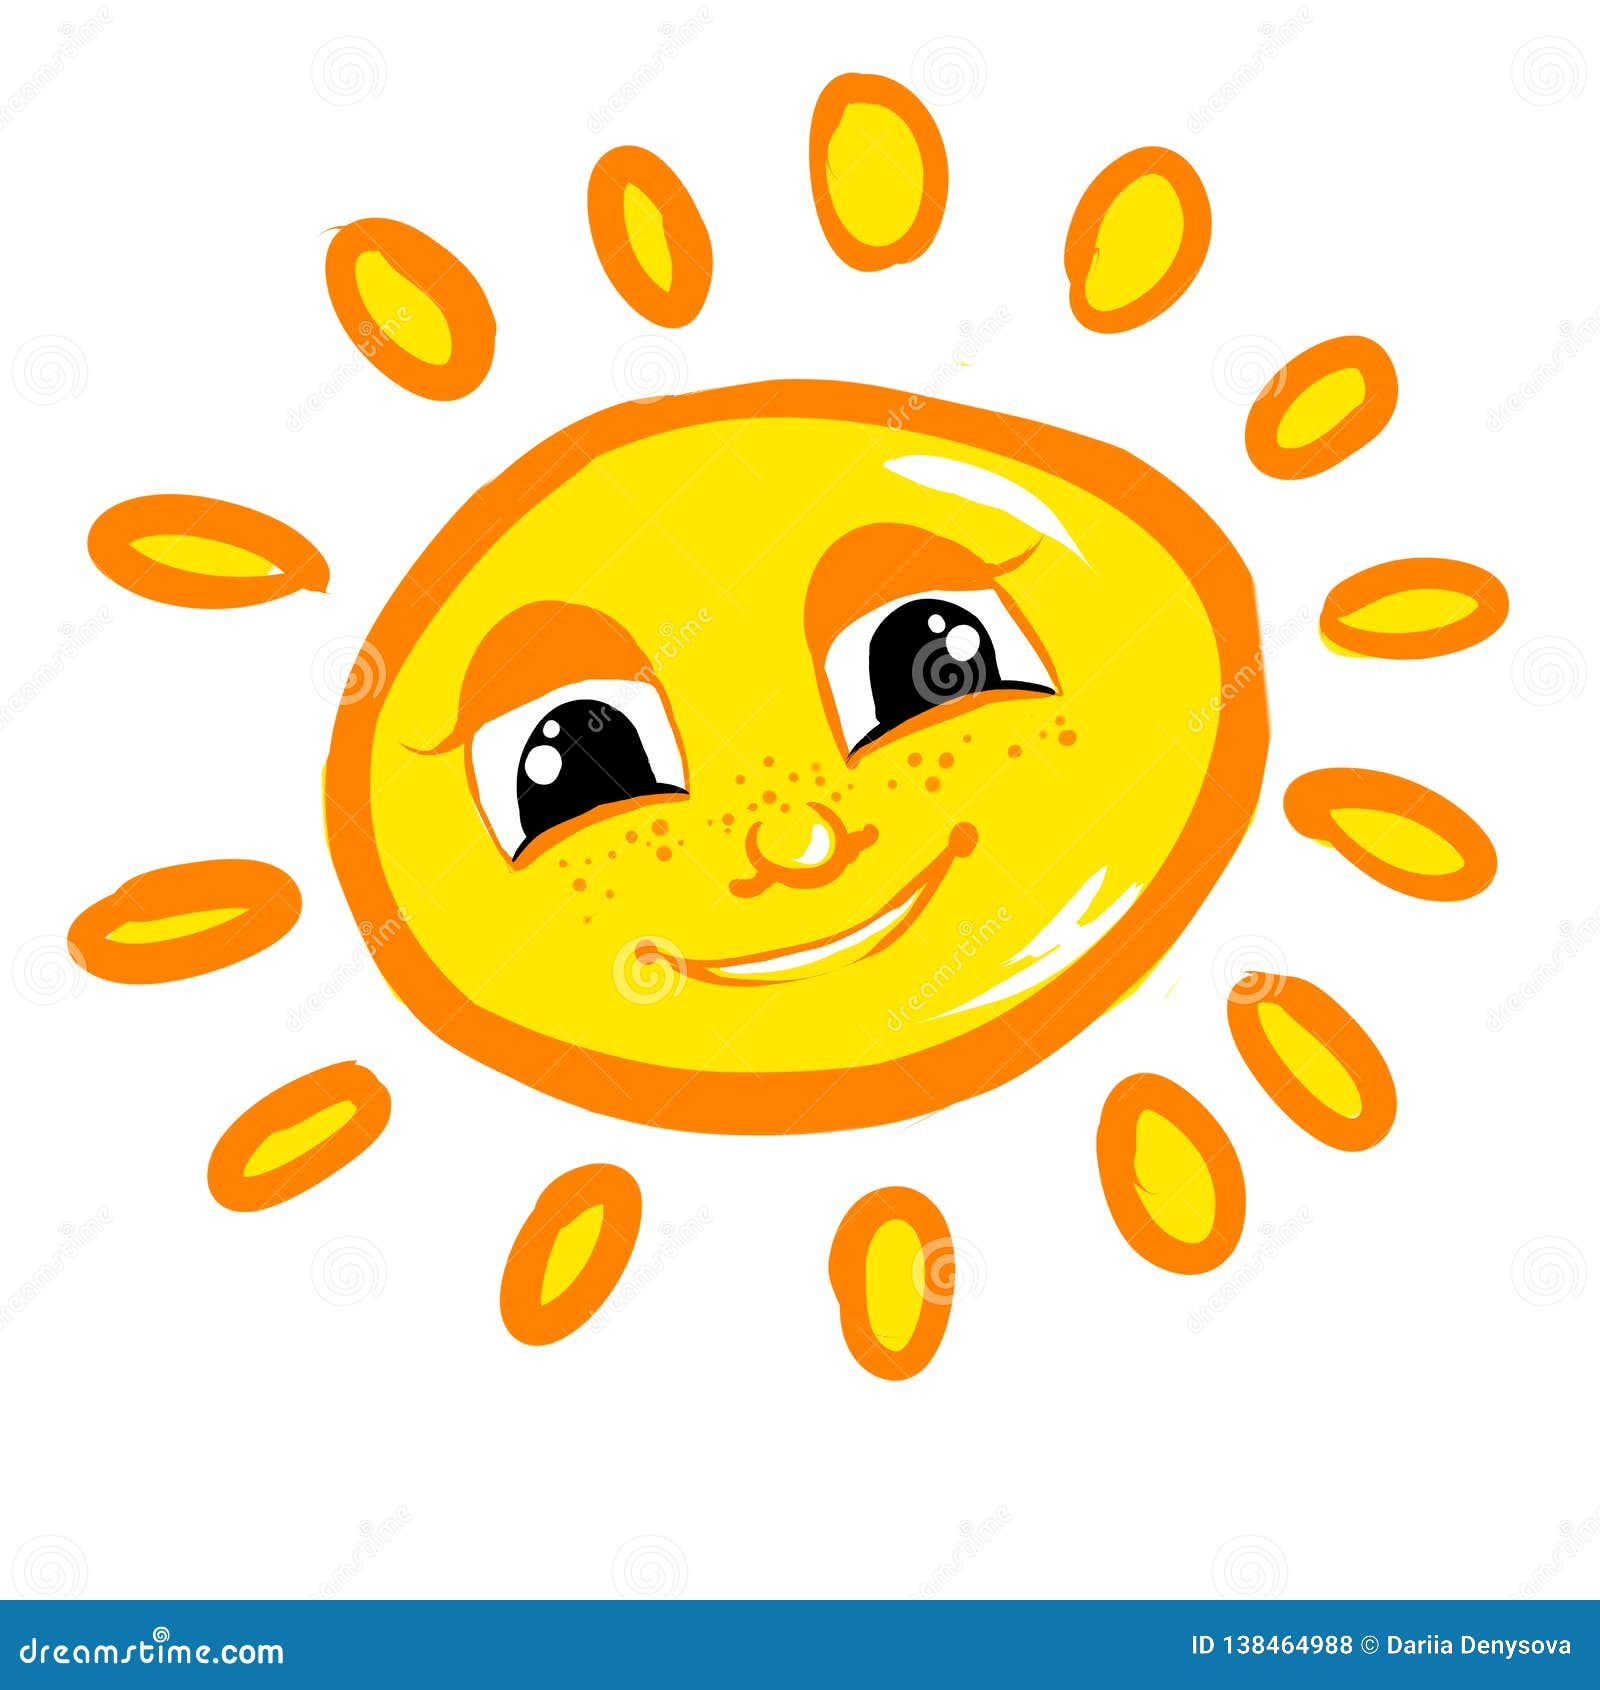 Cheerful Sun Childrens Illustration Stock Vector Illustration Of